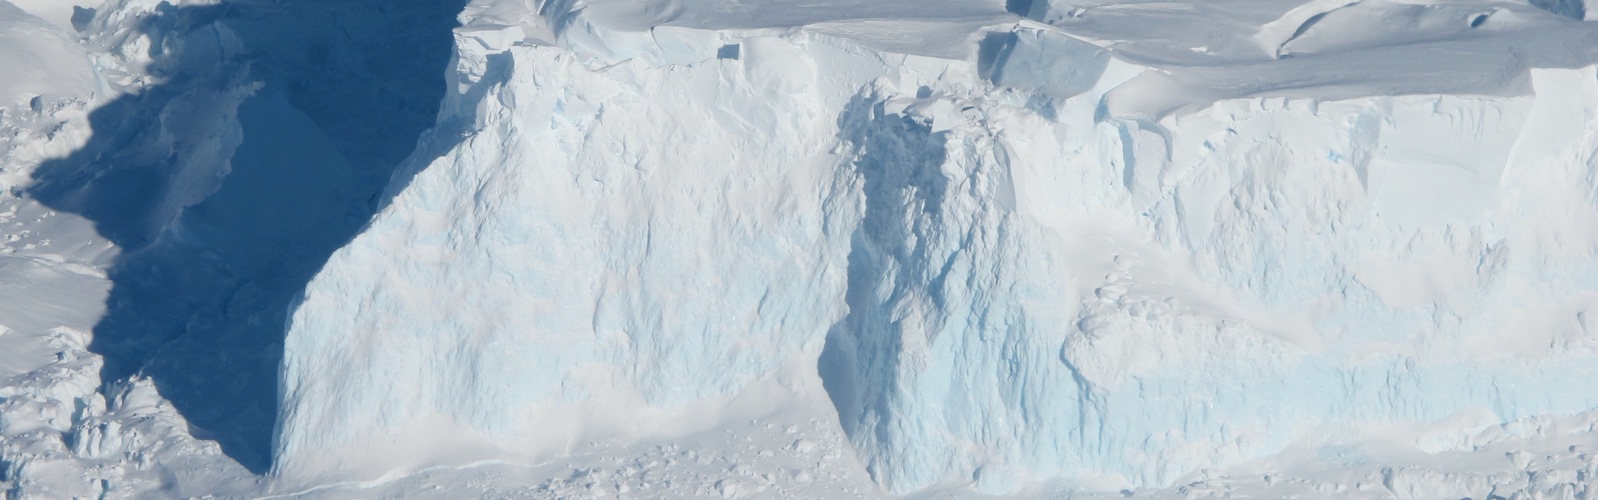 slide 3 - Photo of Thwaites Glacier in Antarctica.